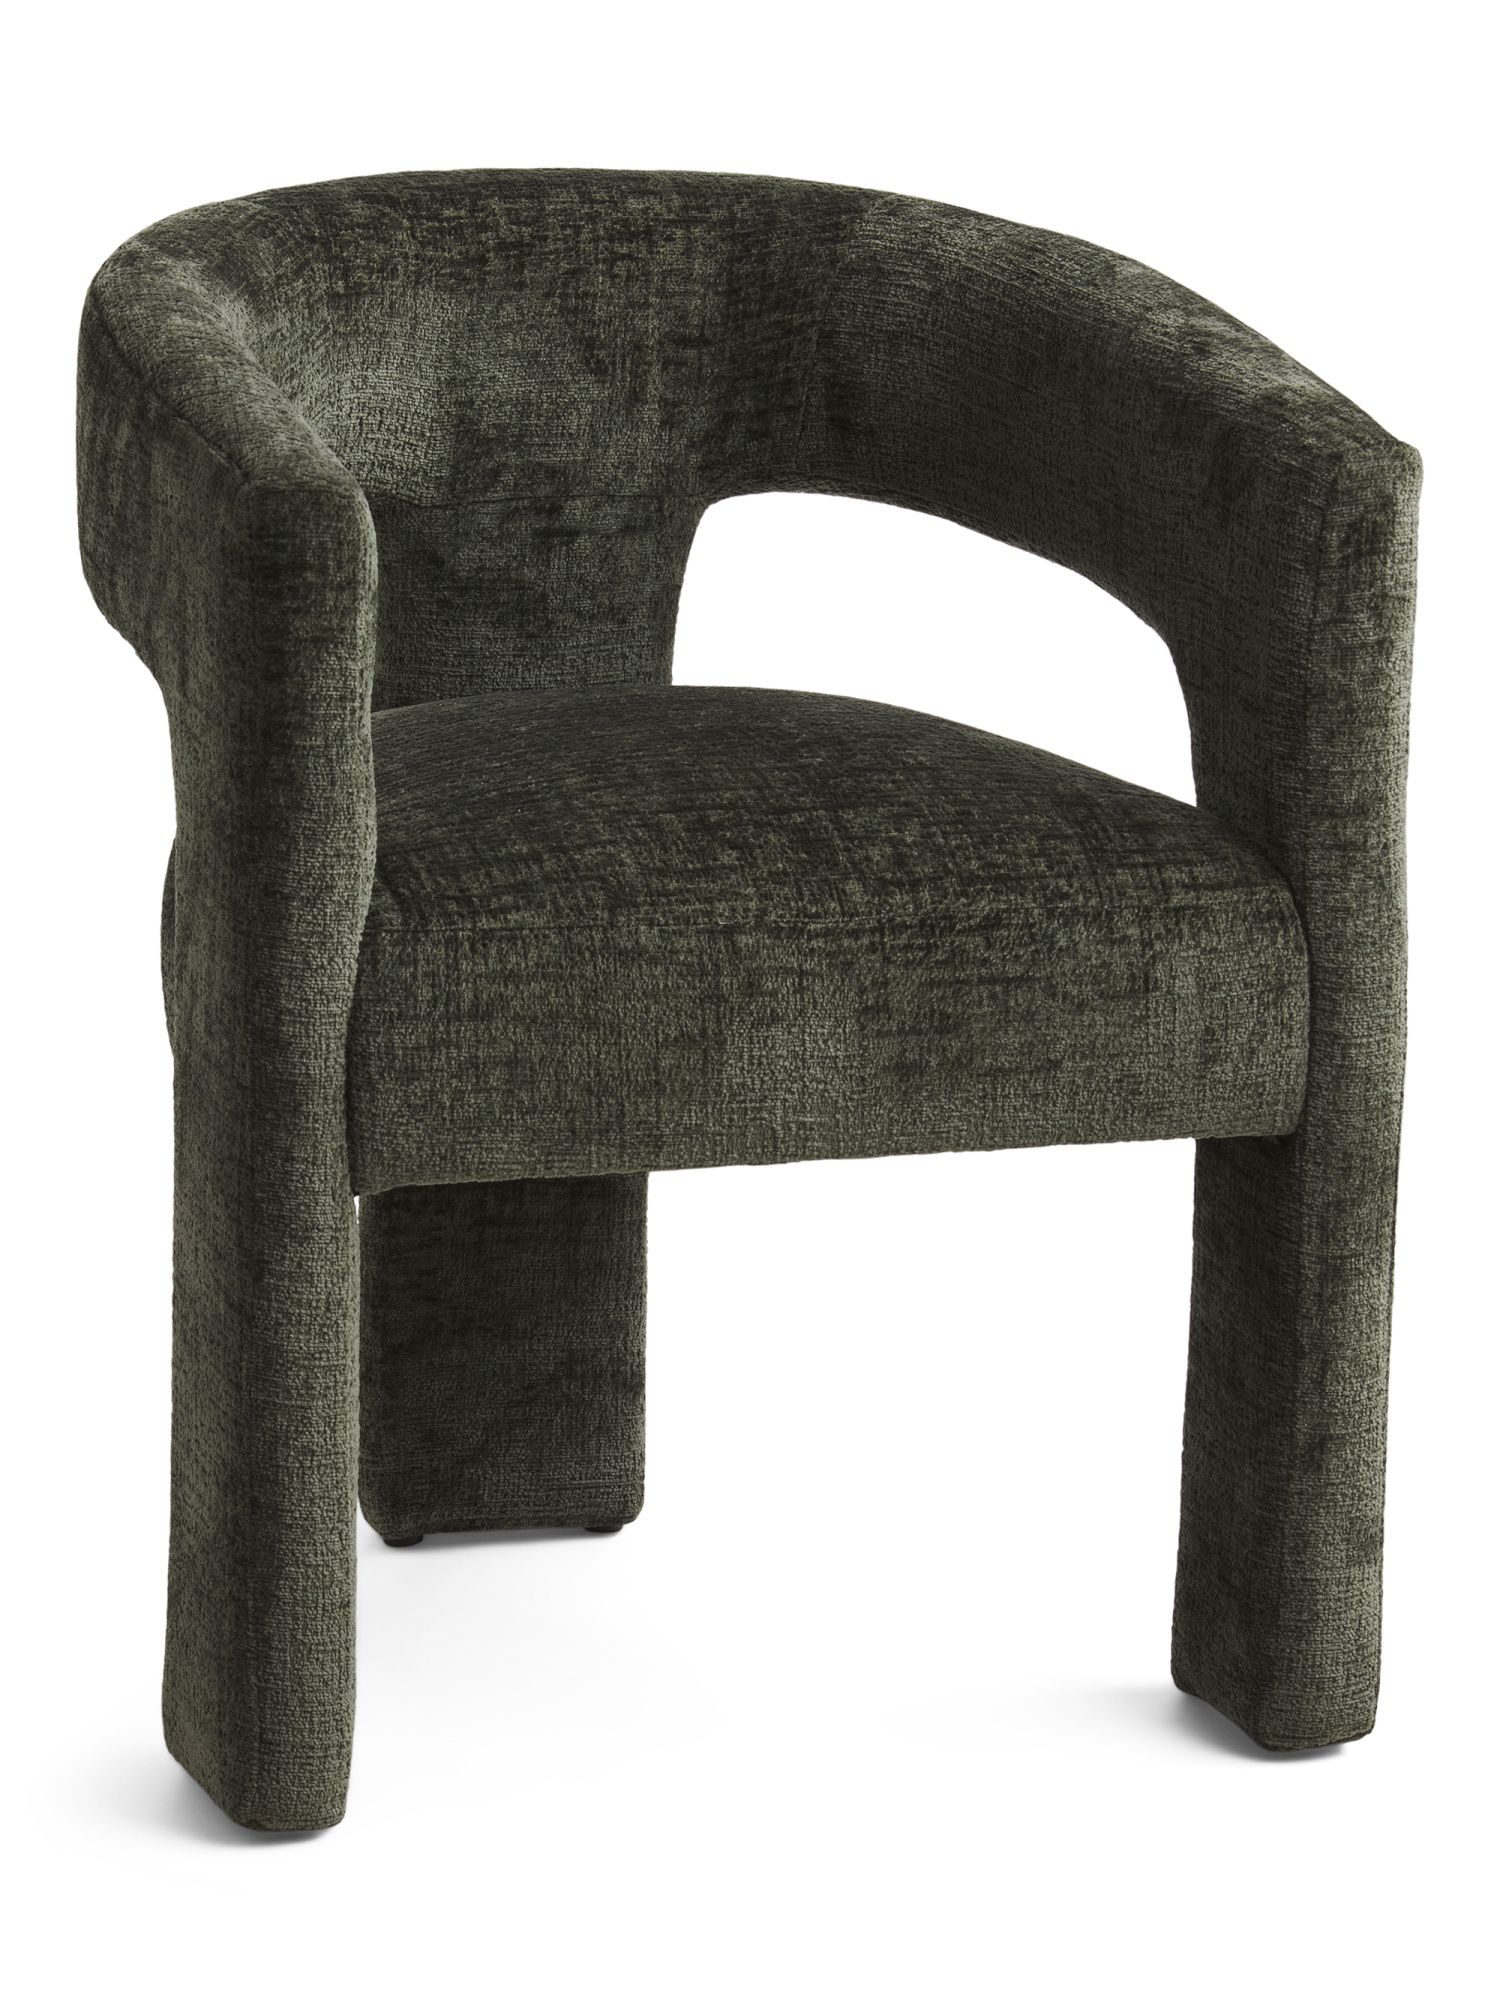 JOFRAN
							
							Modern Curve Back Dining Chair
						
						
							

	
		
						
							$1... | Marshalls